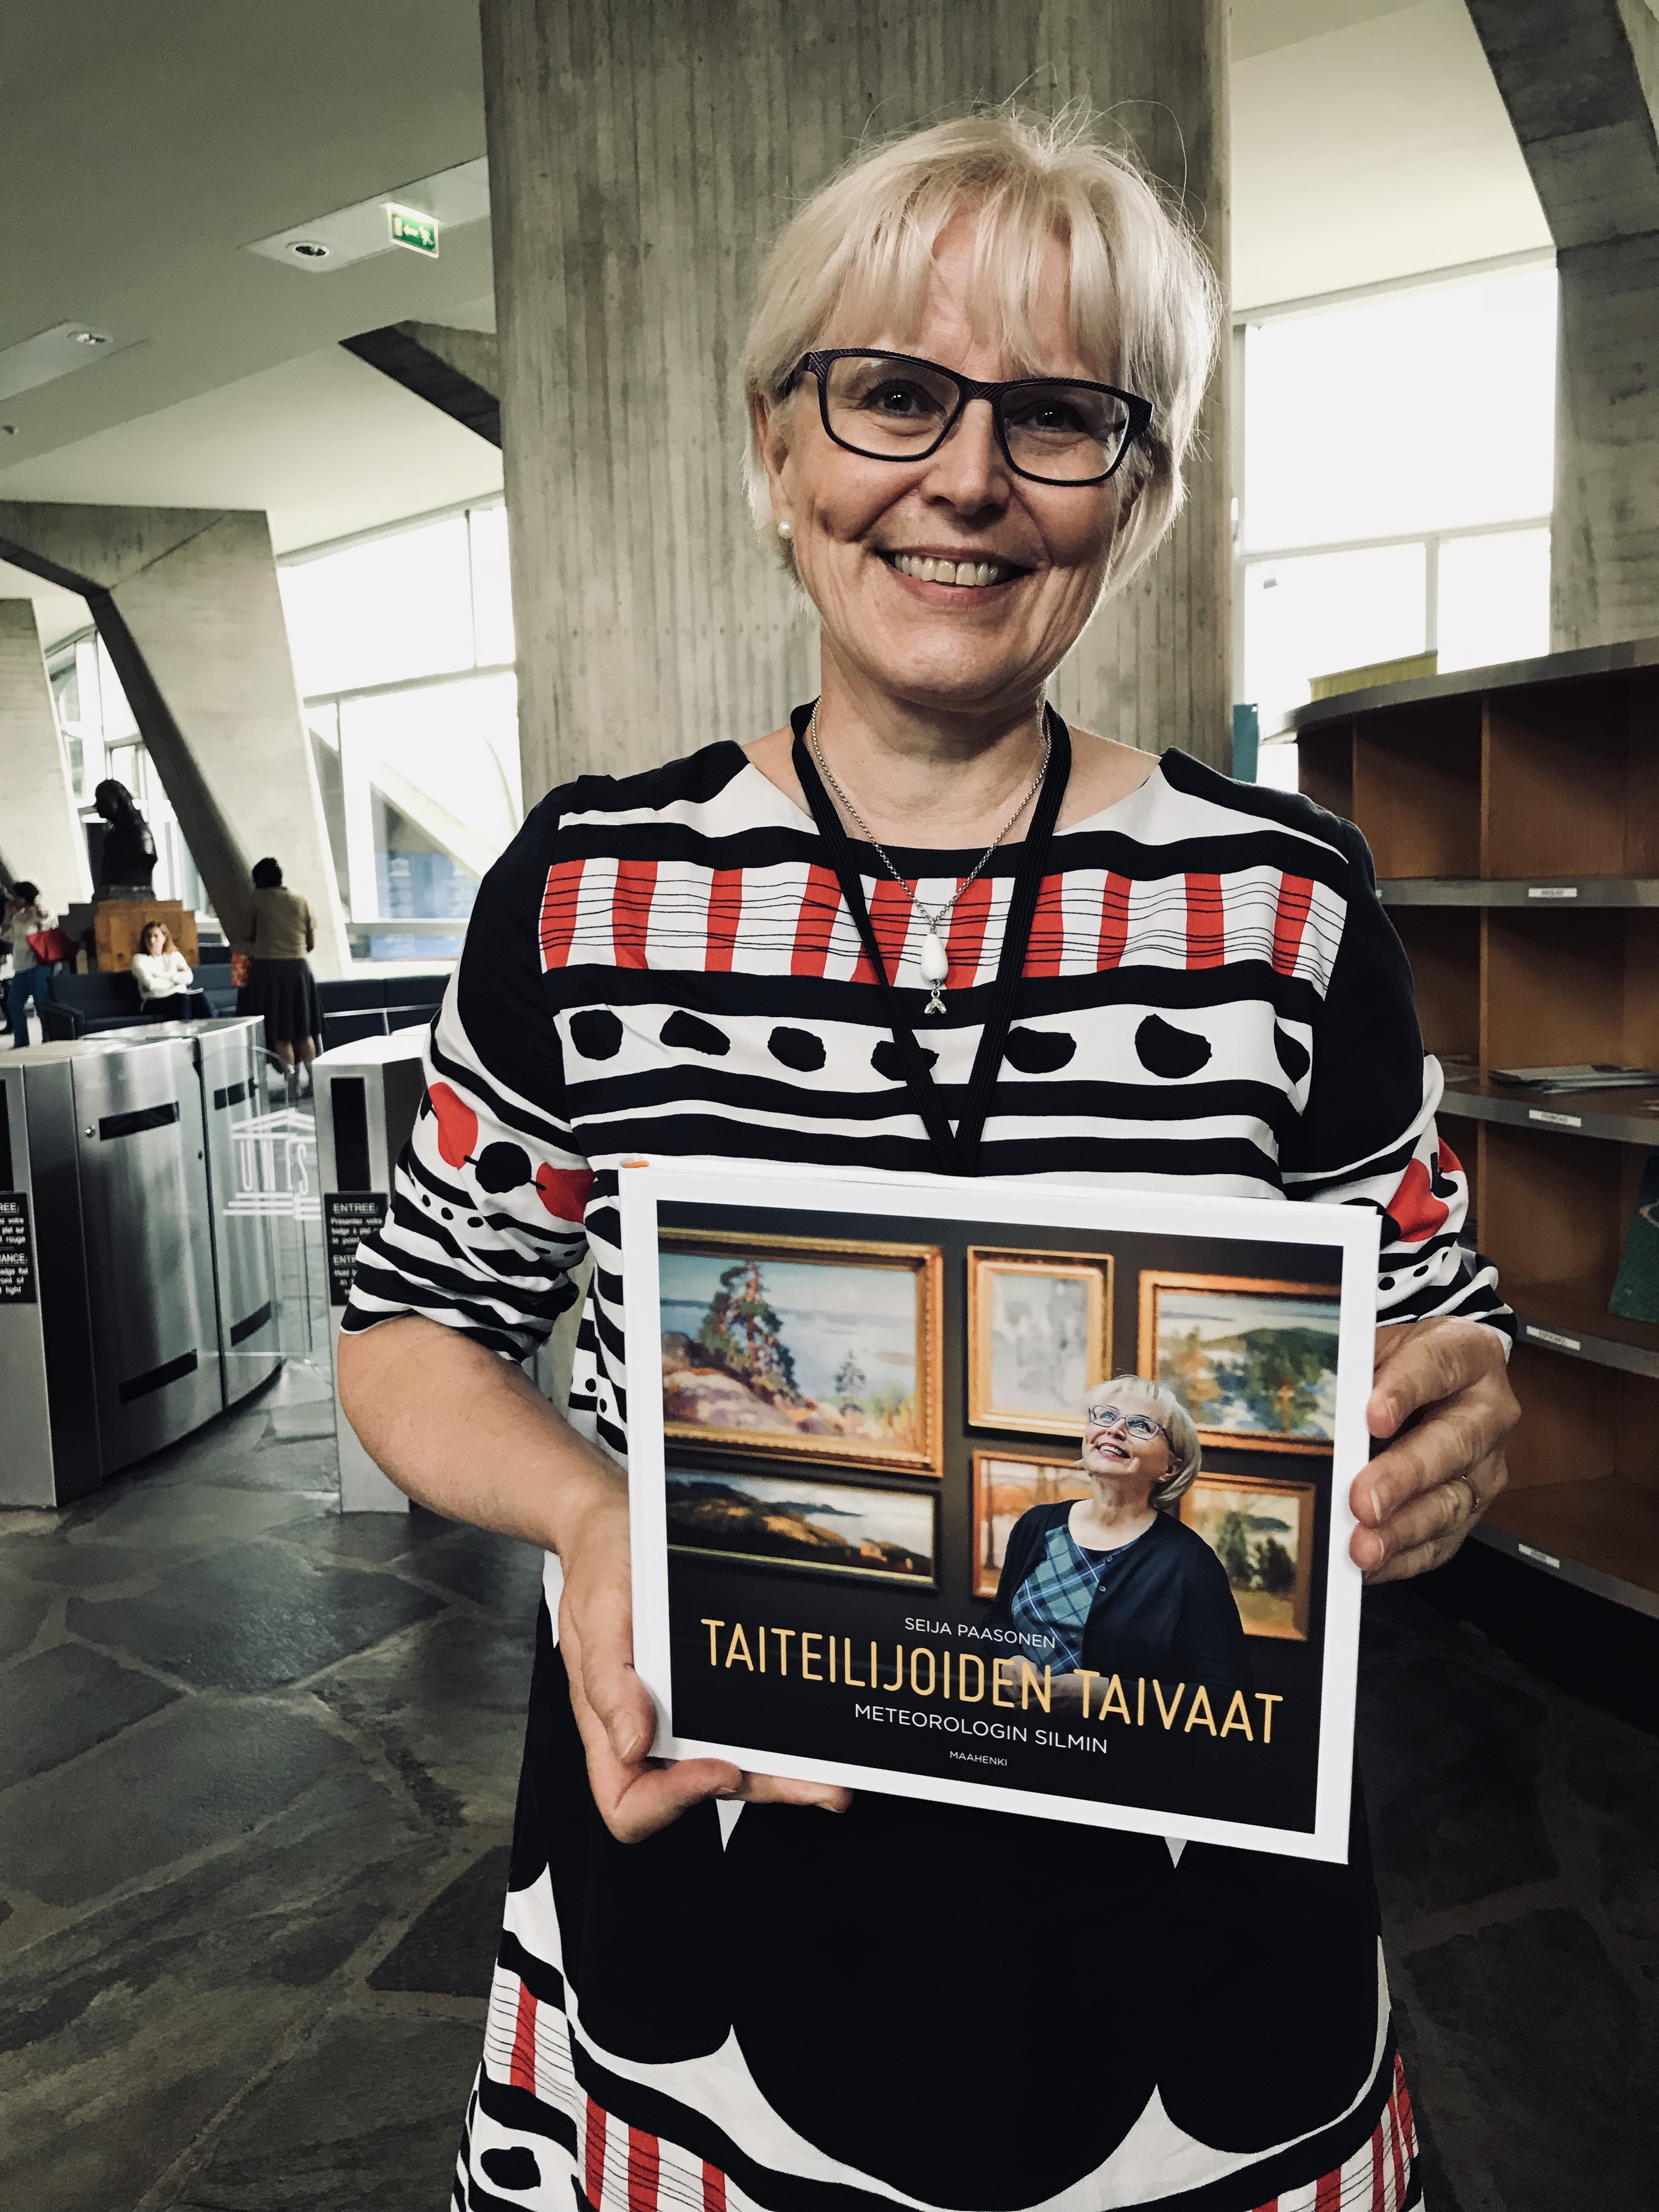 Seija Paasonen from Finland holding her new book